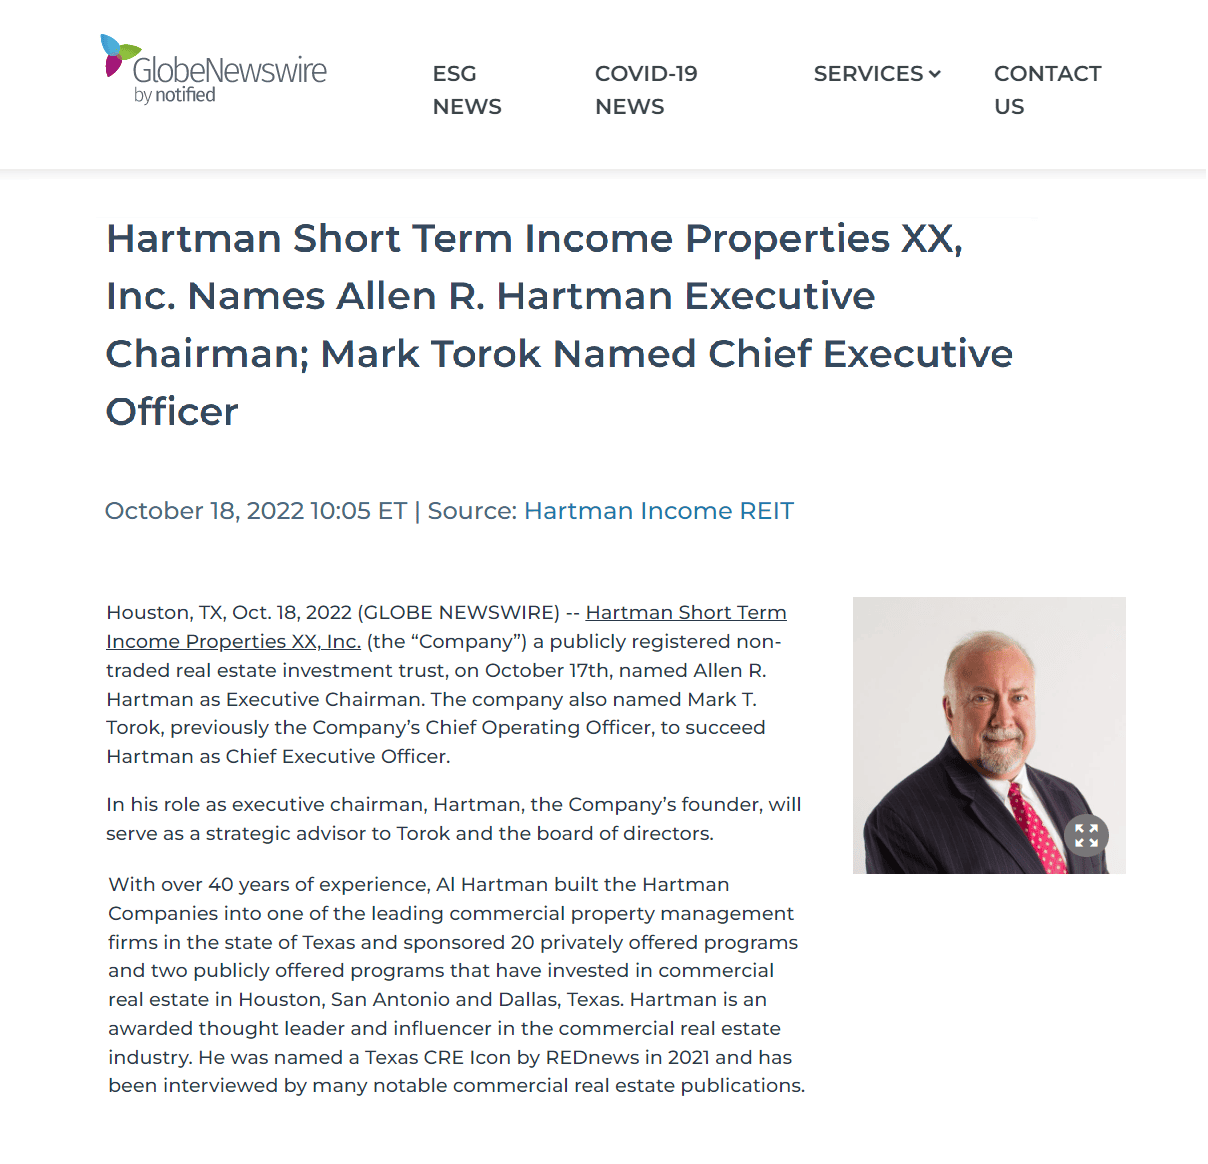 Hartman Short Term Income Properties XX, Inc. Names Mark Torok Chief Executive Officer